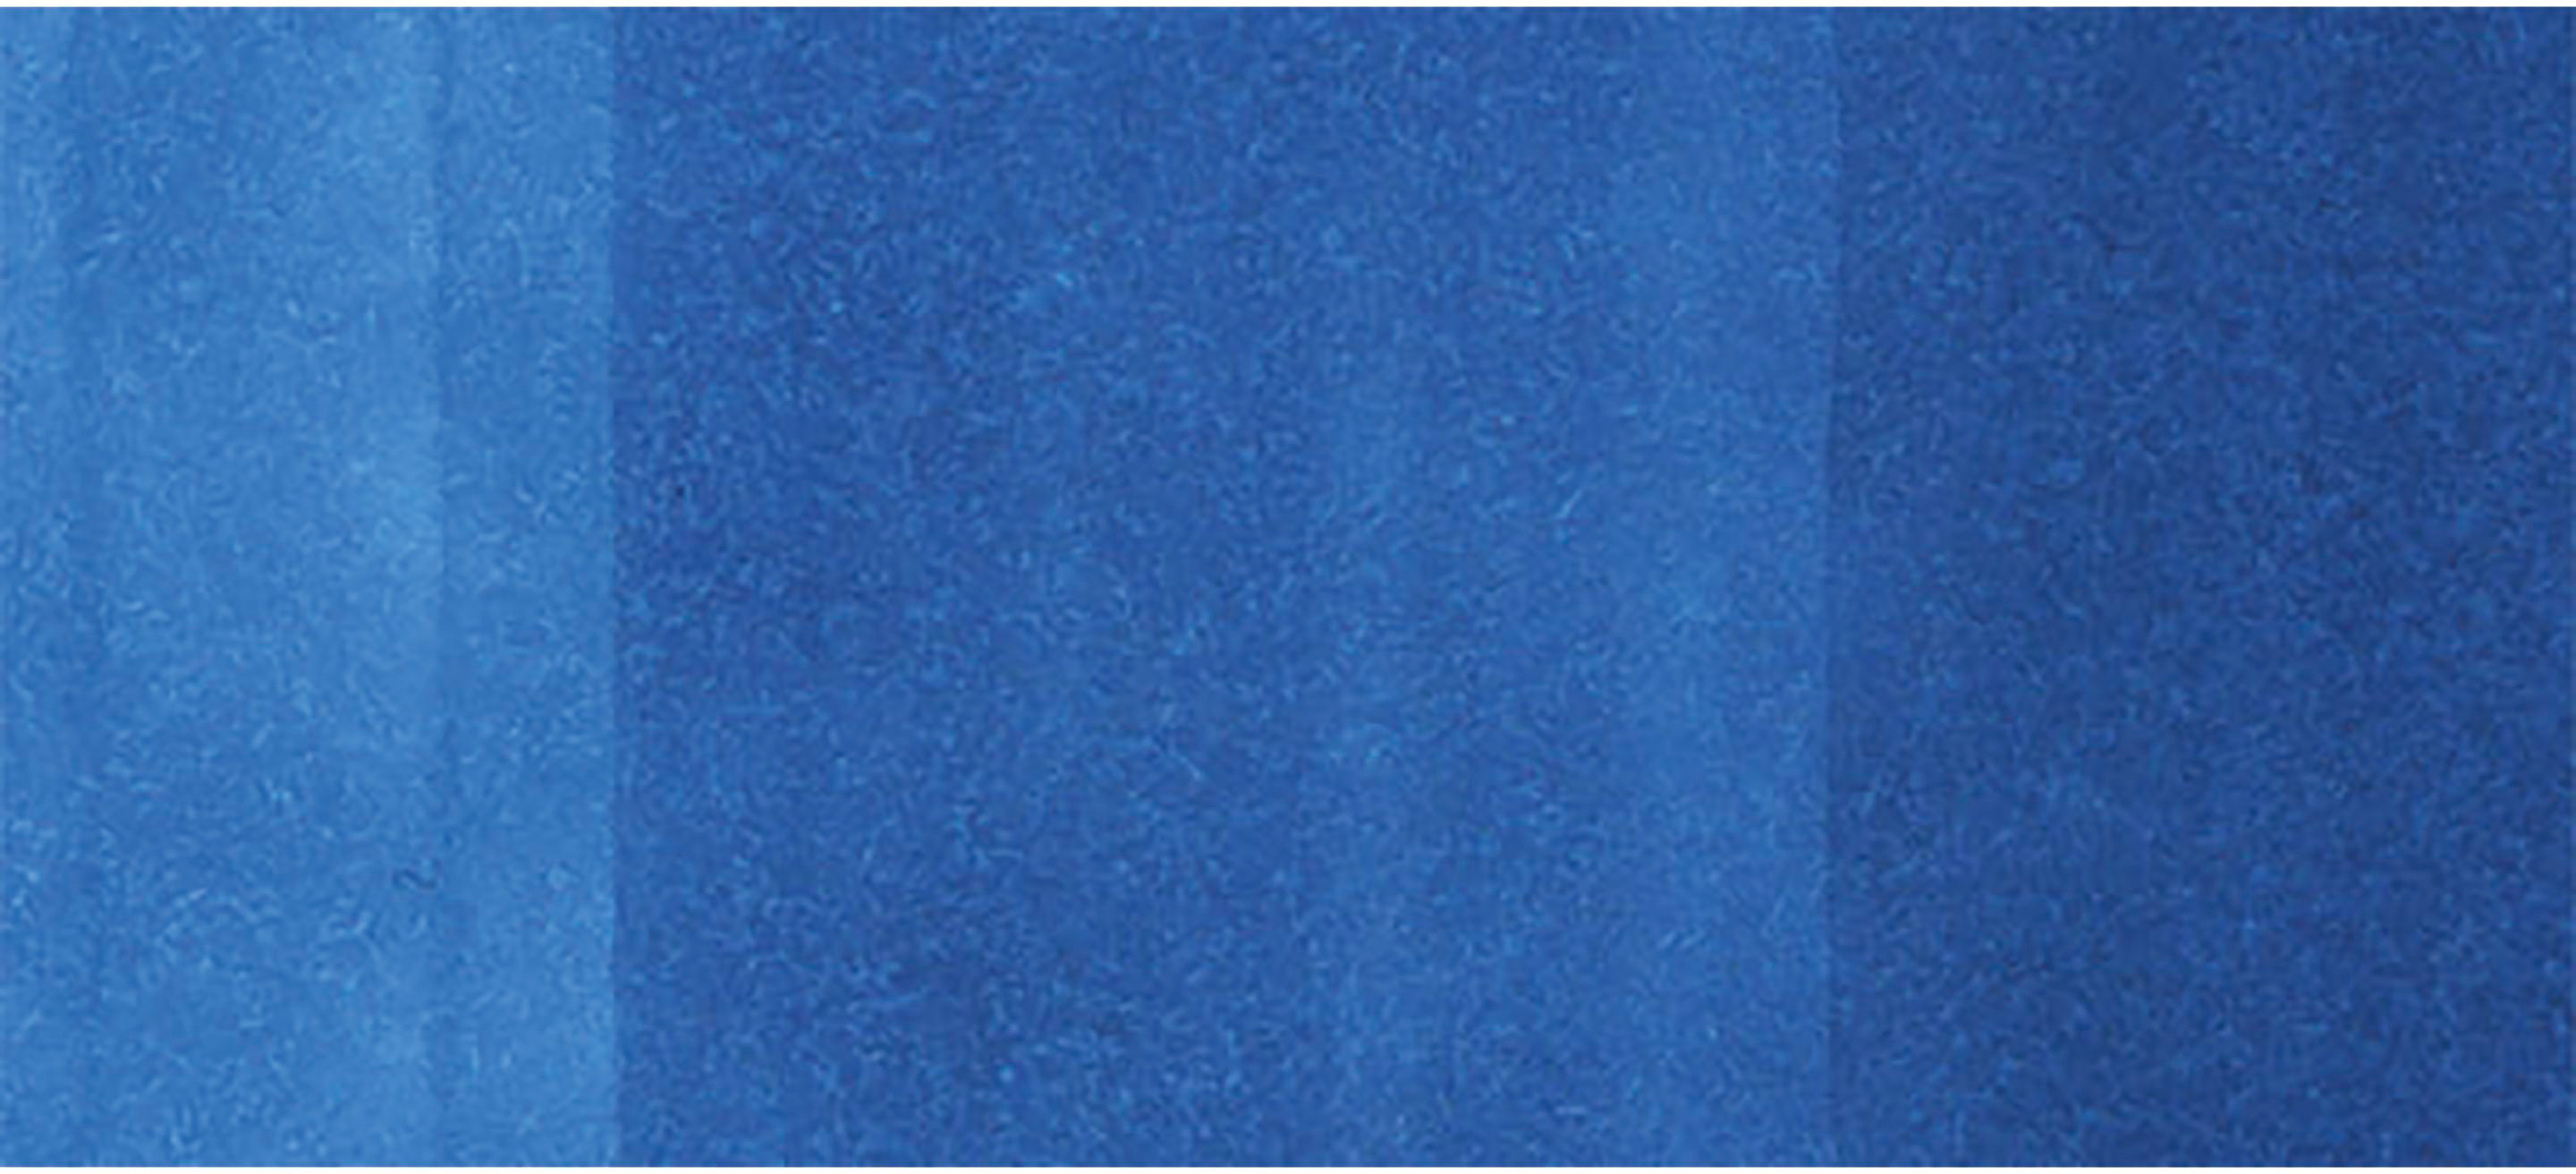 COPIC Marker Classic 2007537 B06 - Peacock Blue